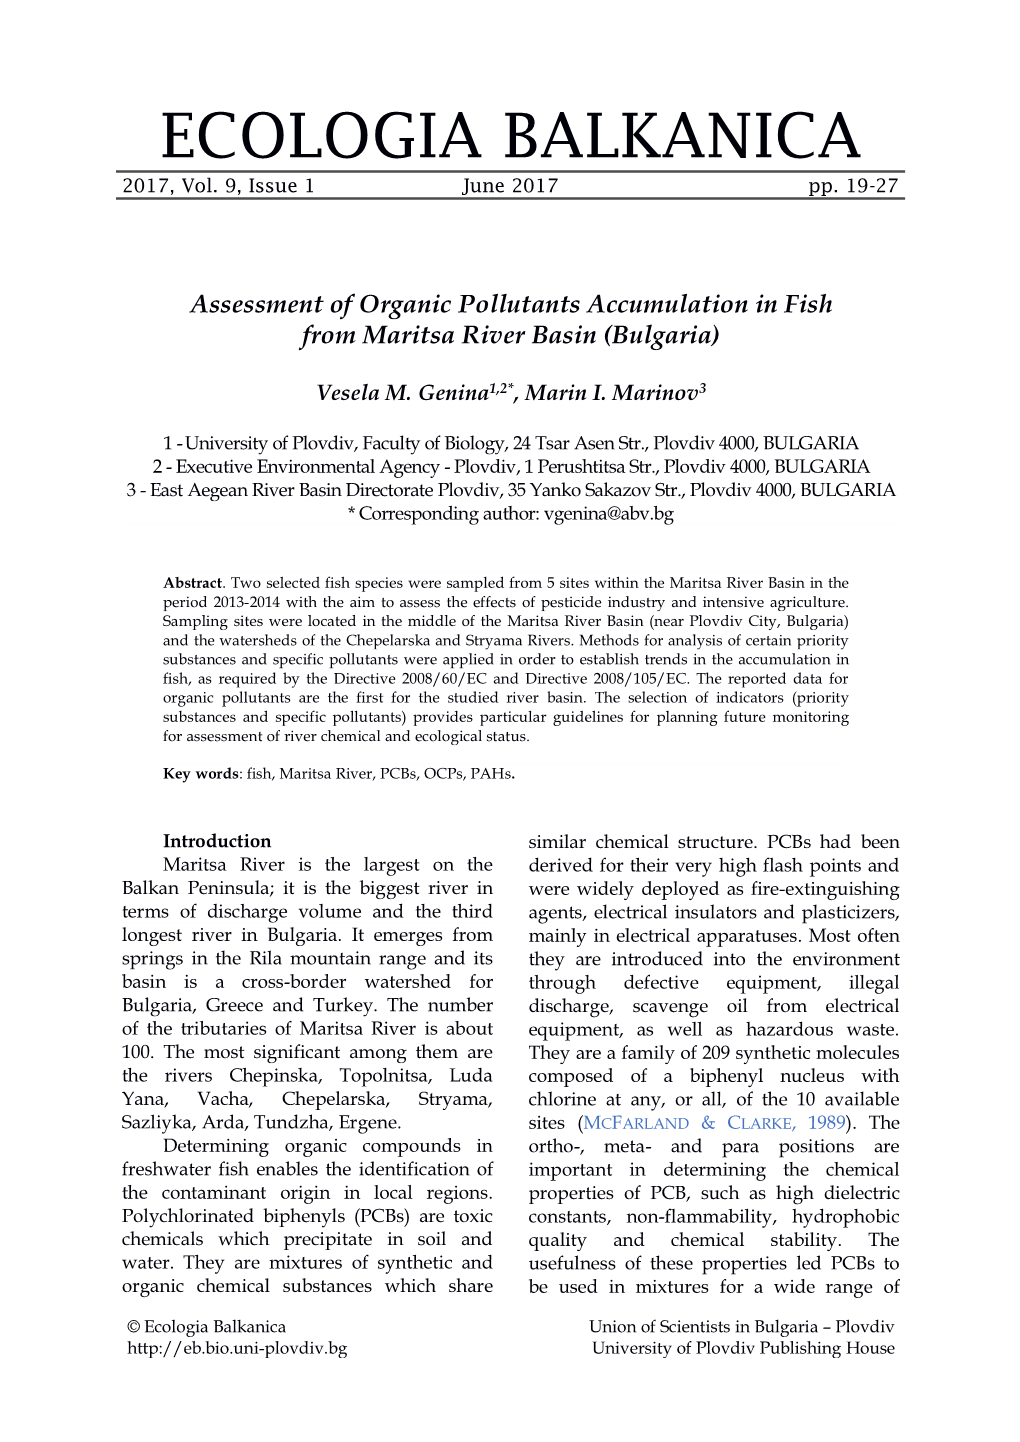 Assessment of Organic Pollutants Accumulation in Fish from Maritsa River Basin (Bulgaria)